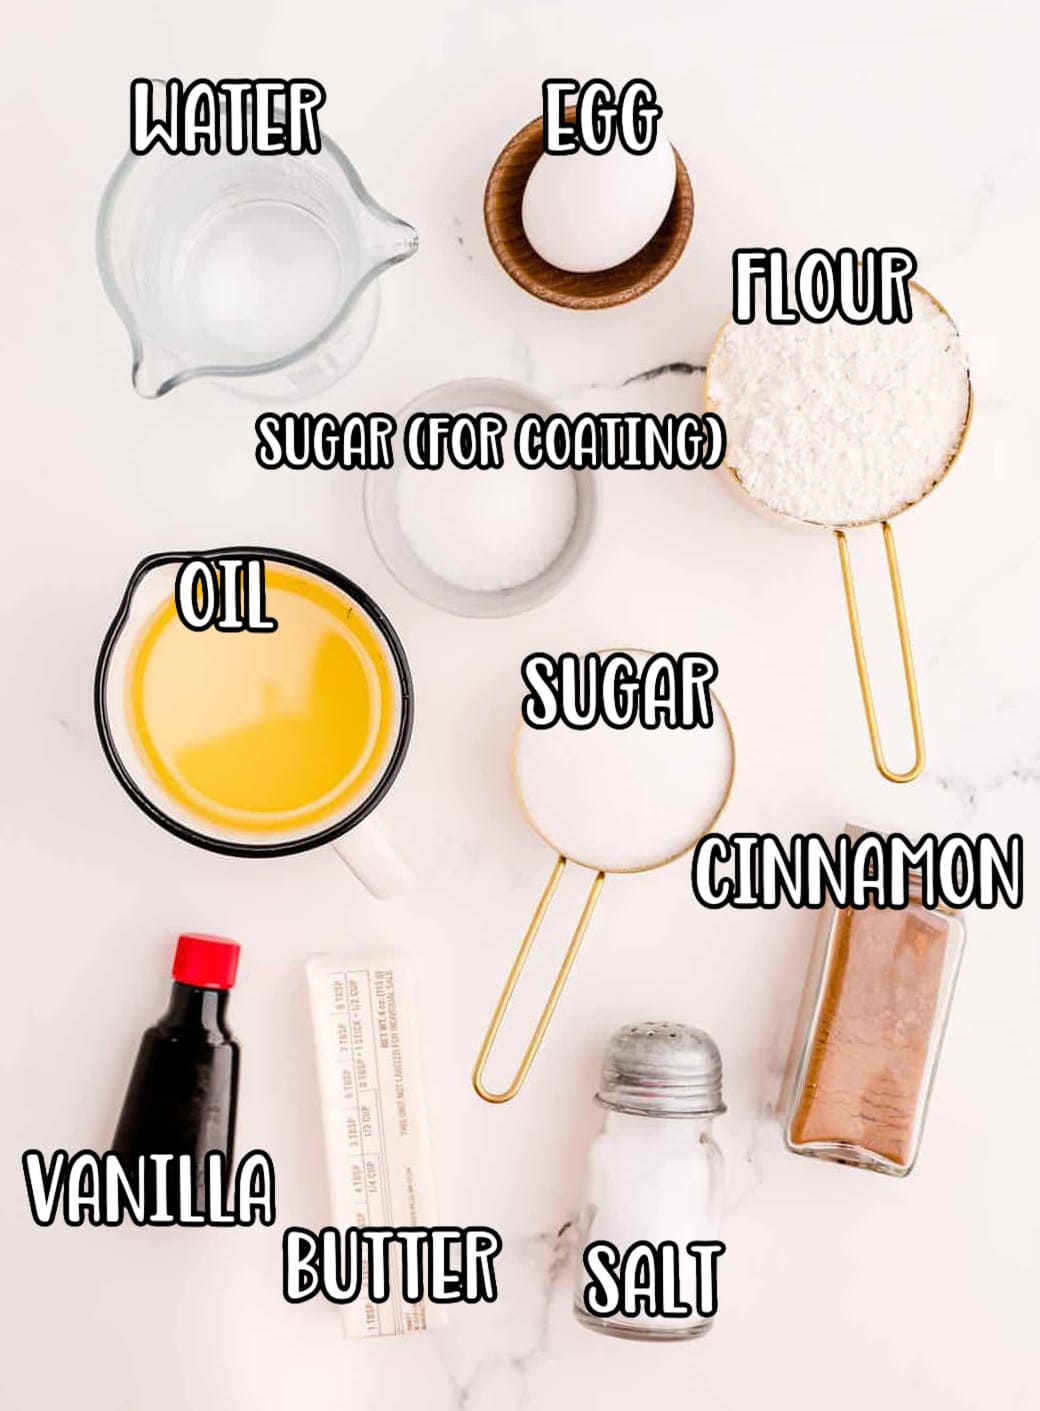 water, egg, flour, sugar, oil, cinnamon, butter, vanilla extract and salt.